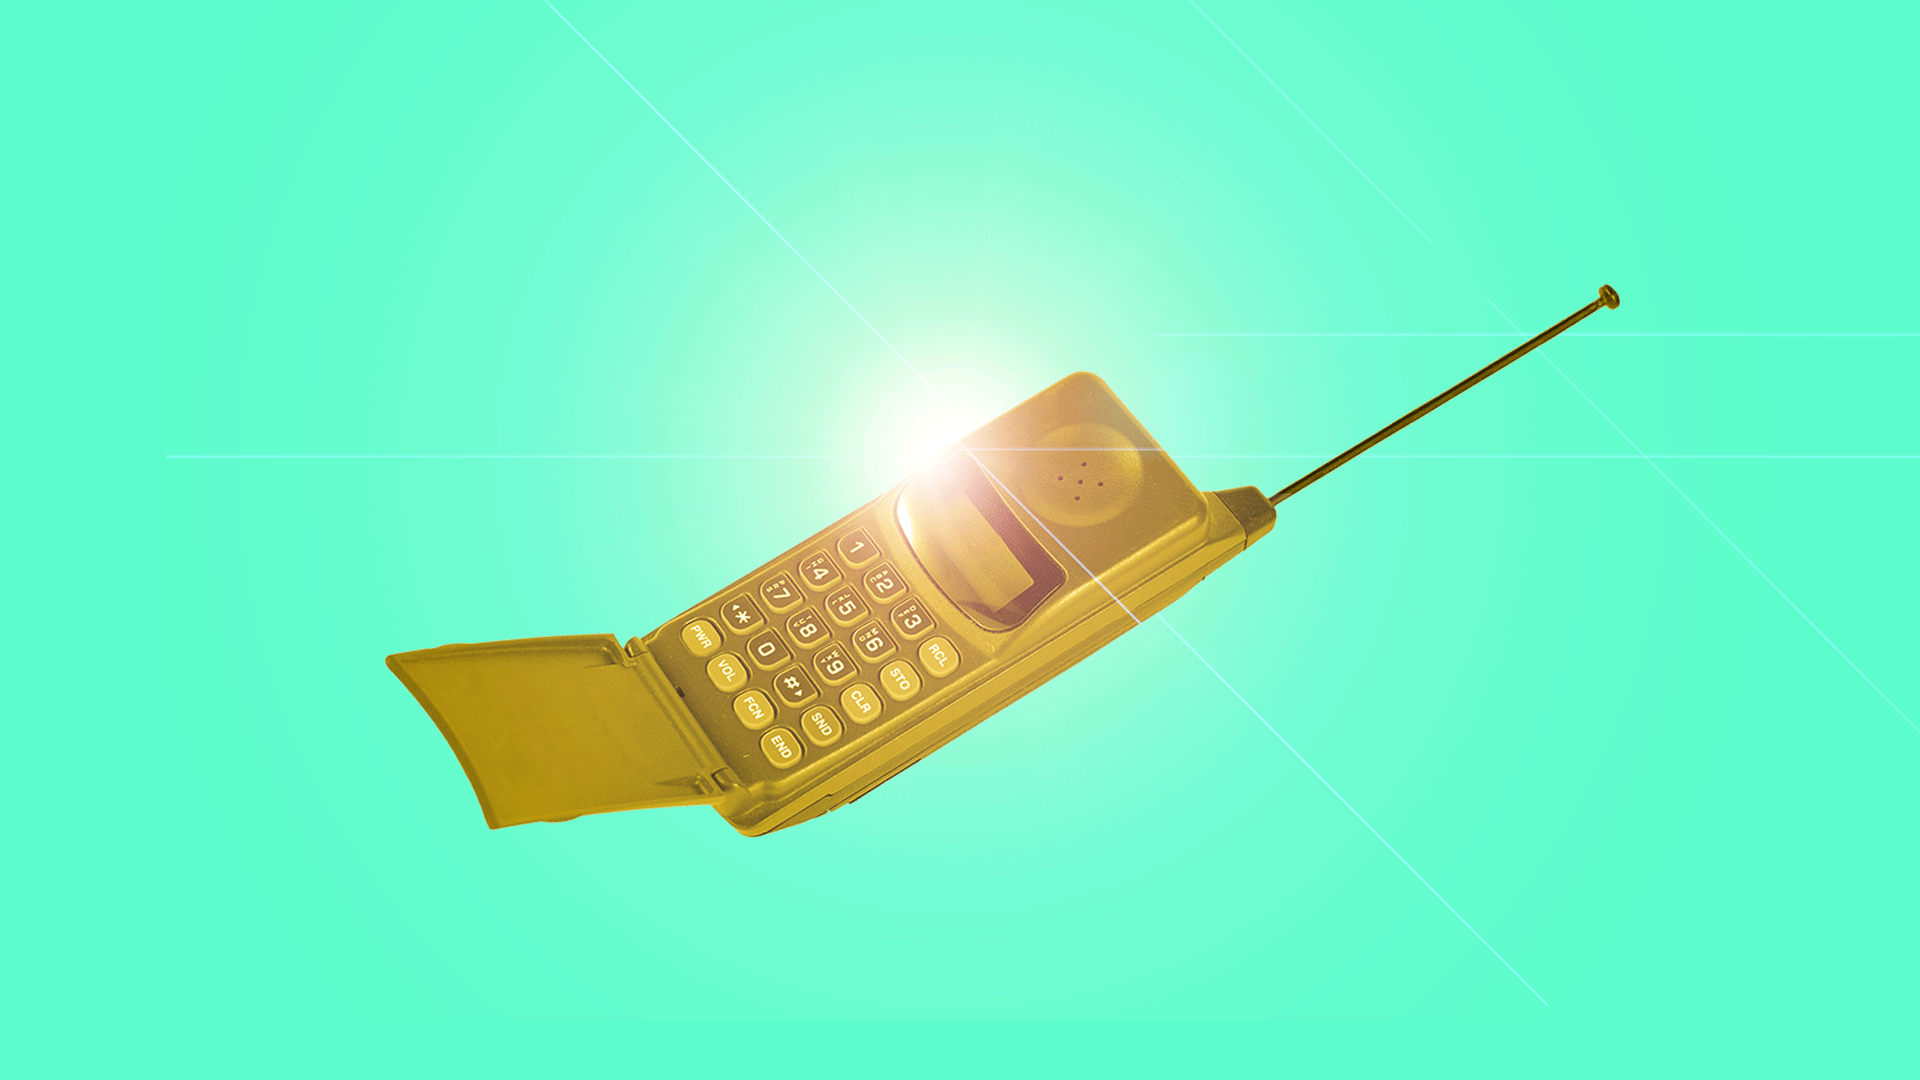 Illustration of a golden walkie talkie